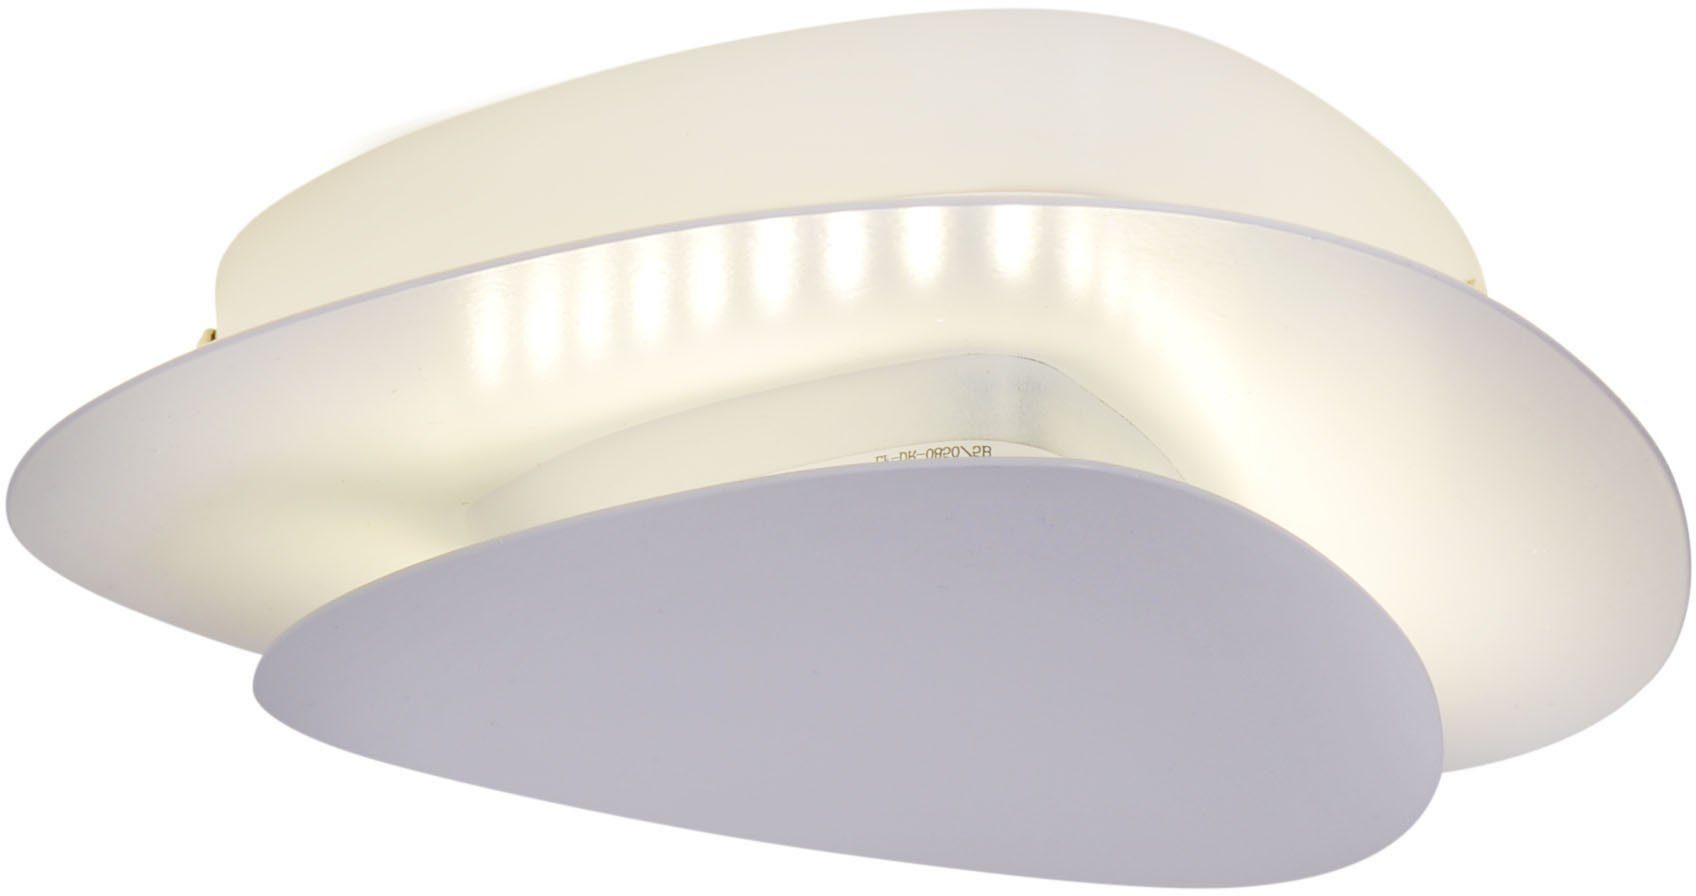 Deckenleuchte Treiber, G, weiß fest Warmweiß, Energieeffizienzklasse Liso, incl. integriert, Material: LED Metall, LED näve Farbe: